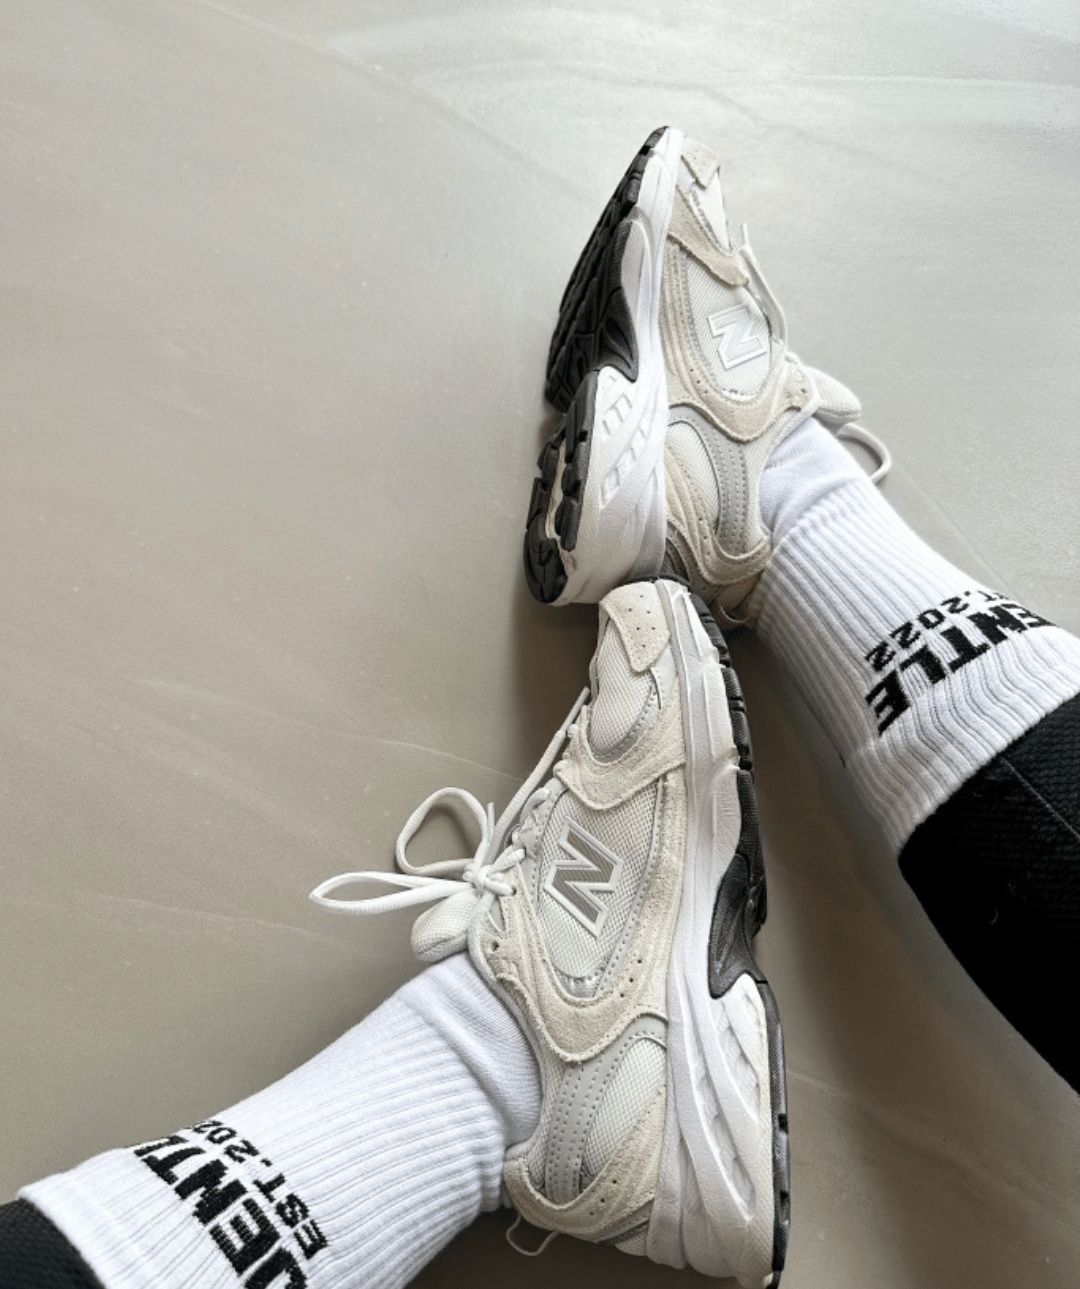 Jentle - Training Original Socks (White)